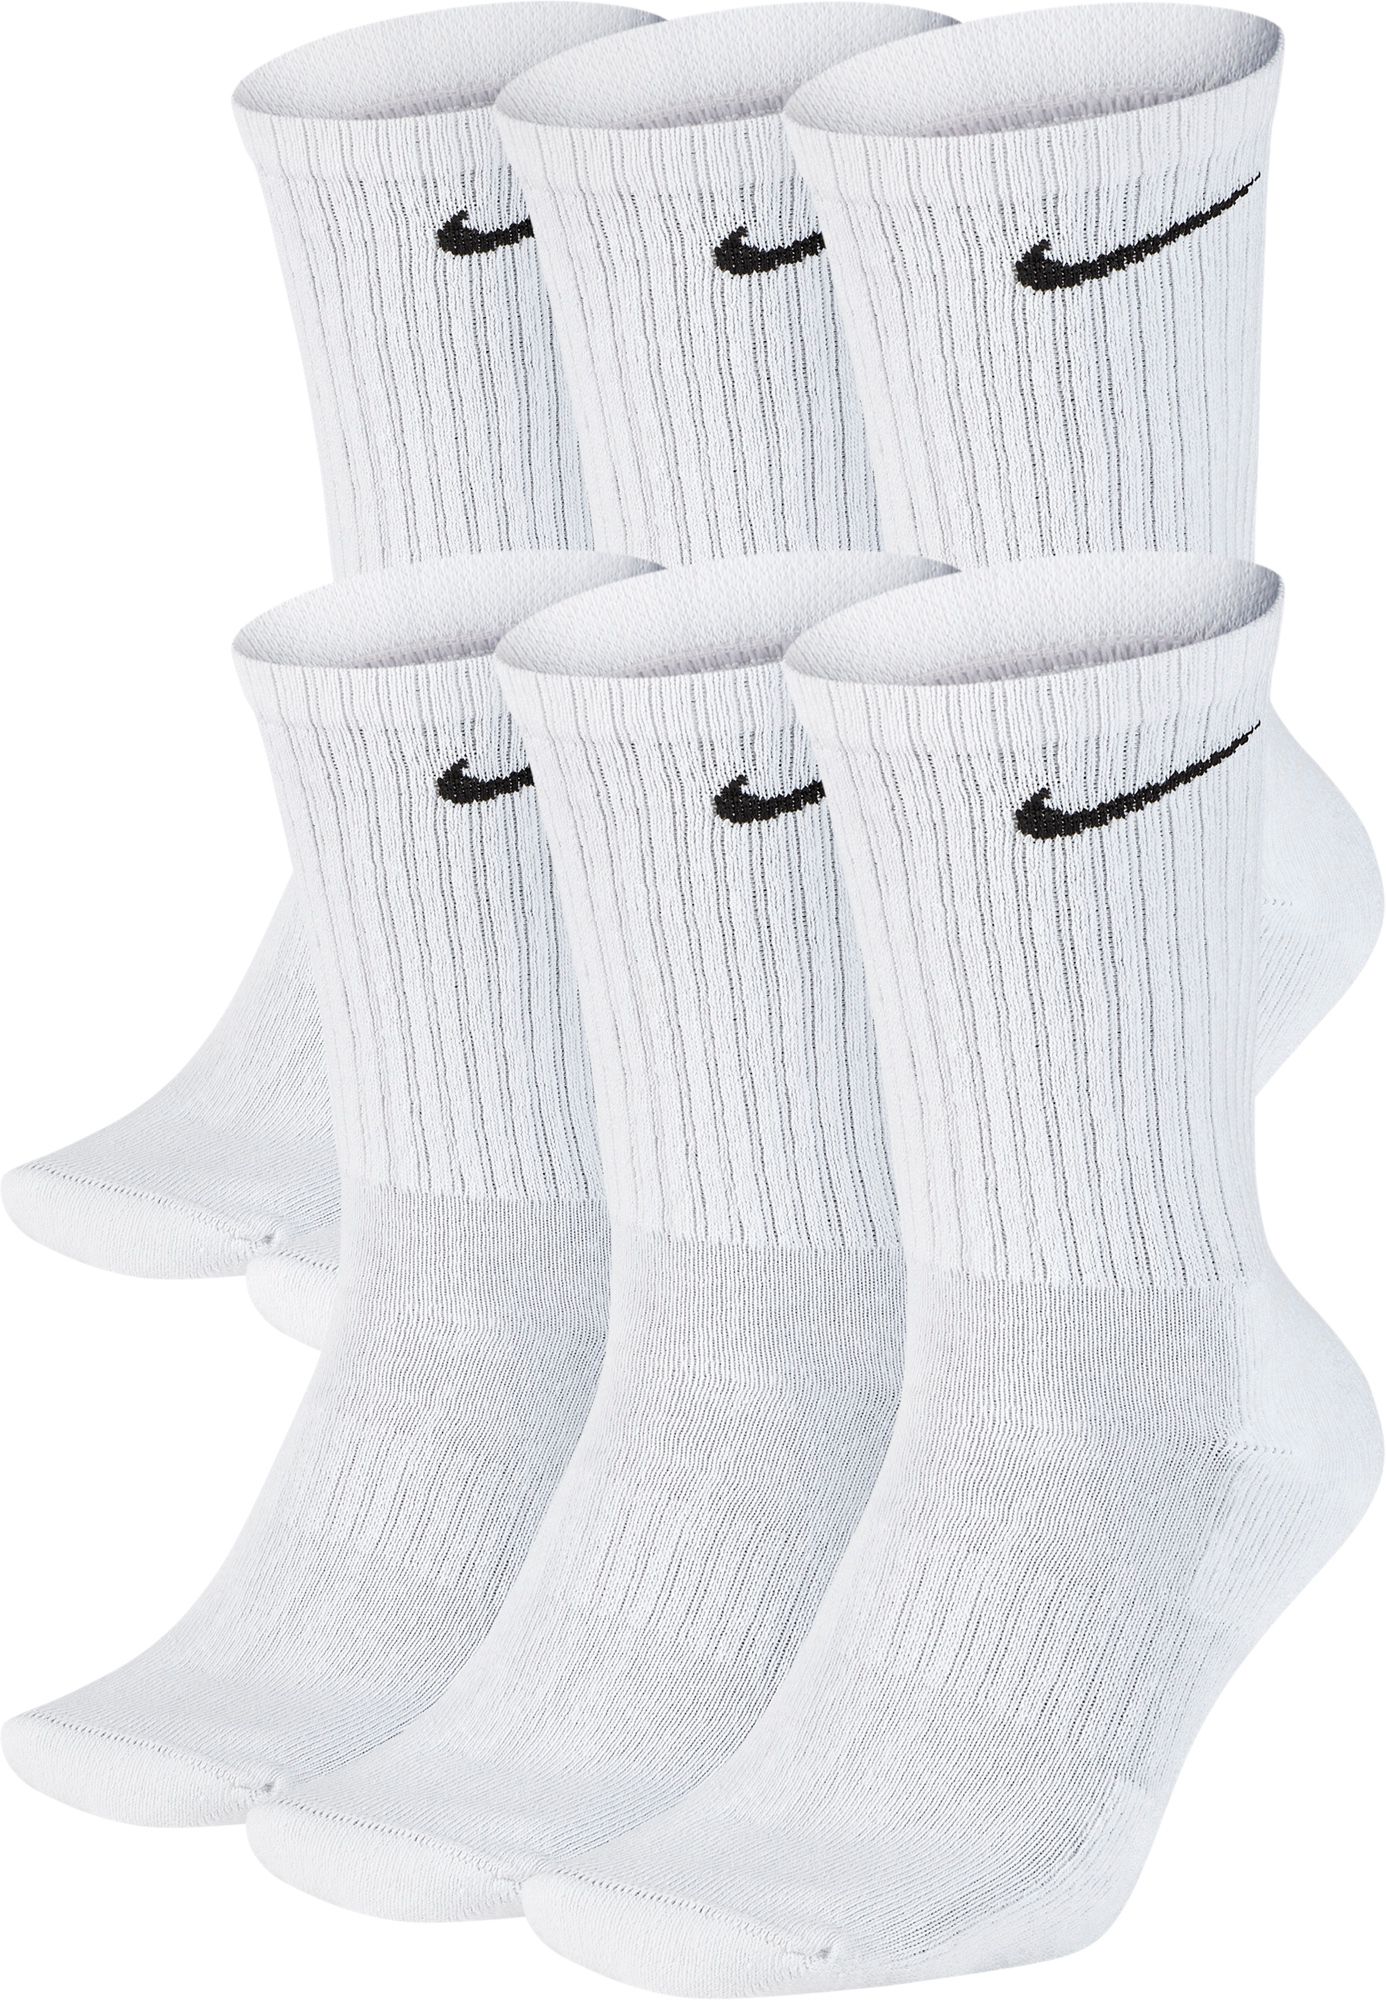 socks nike white